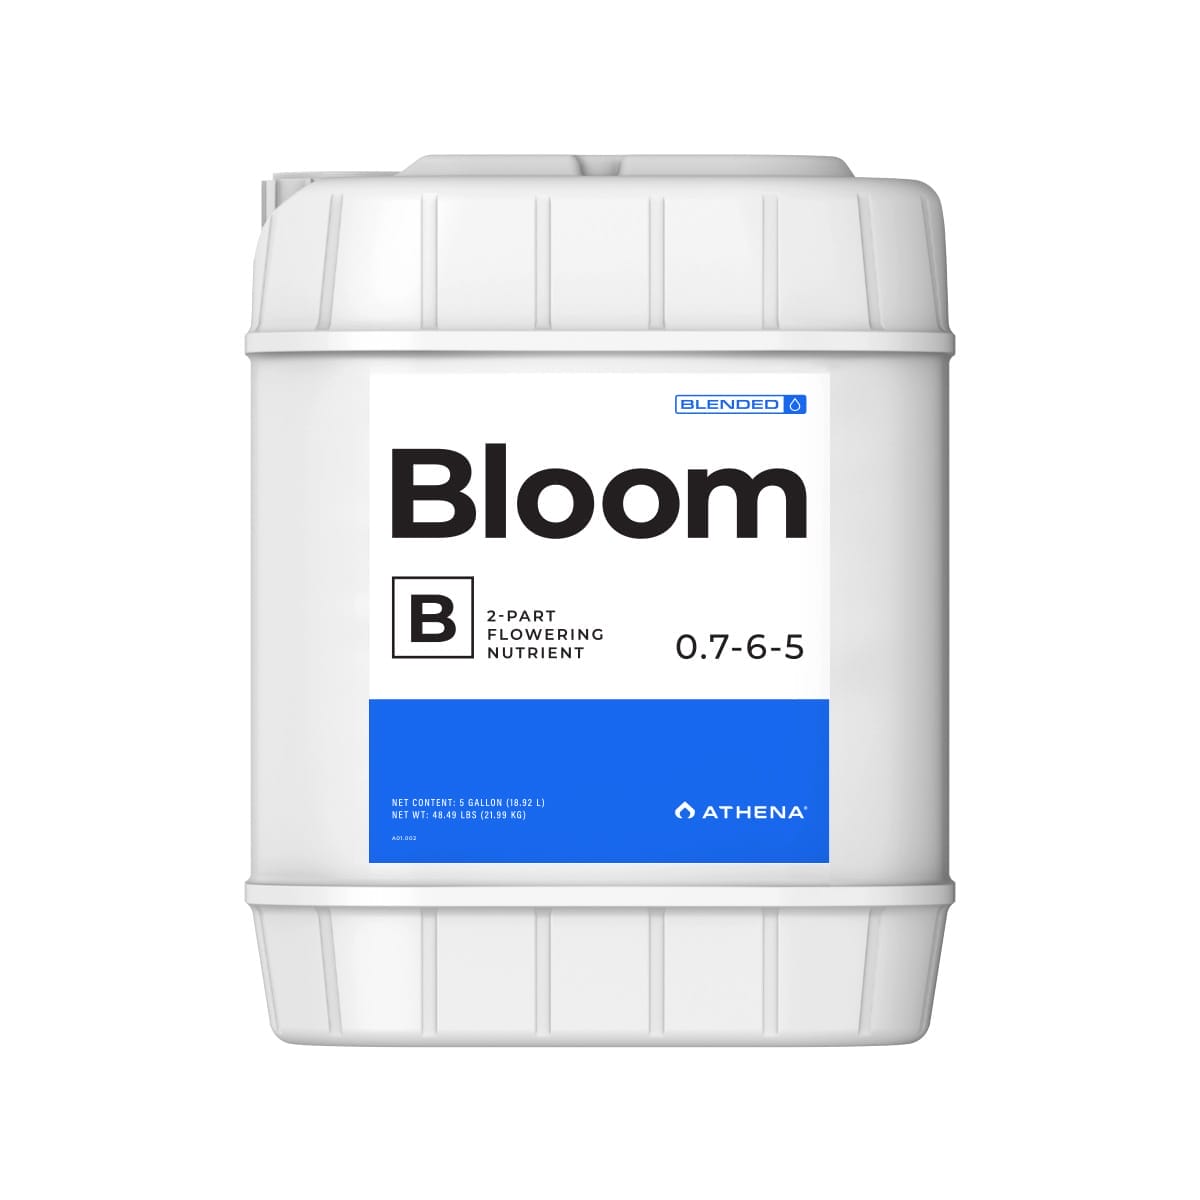 New Athena Bloom B 5 Gallon